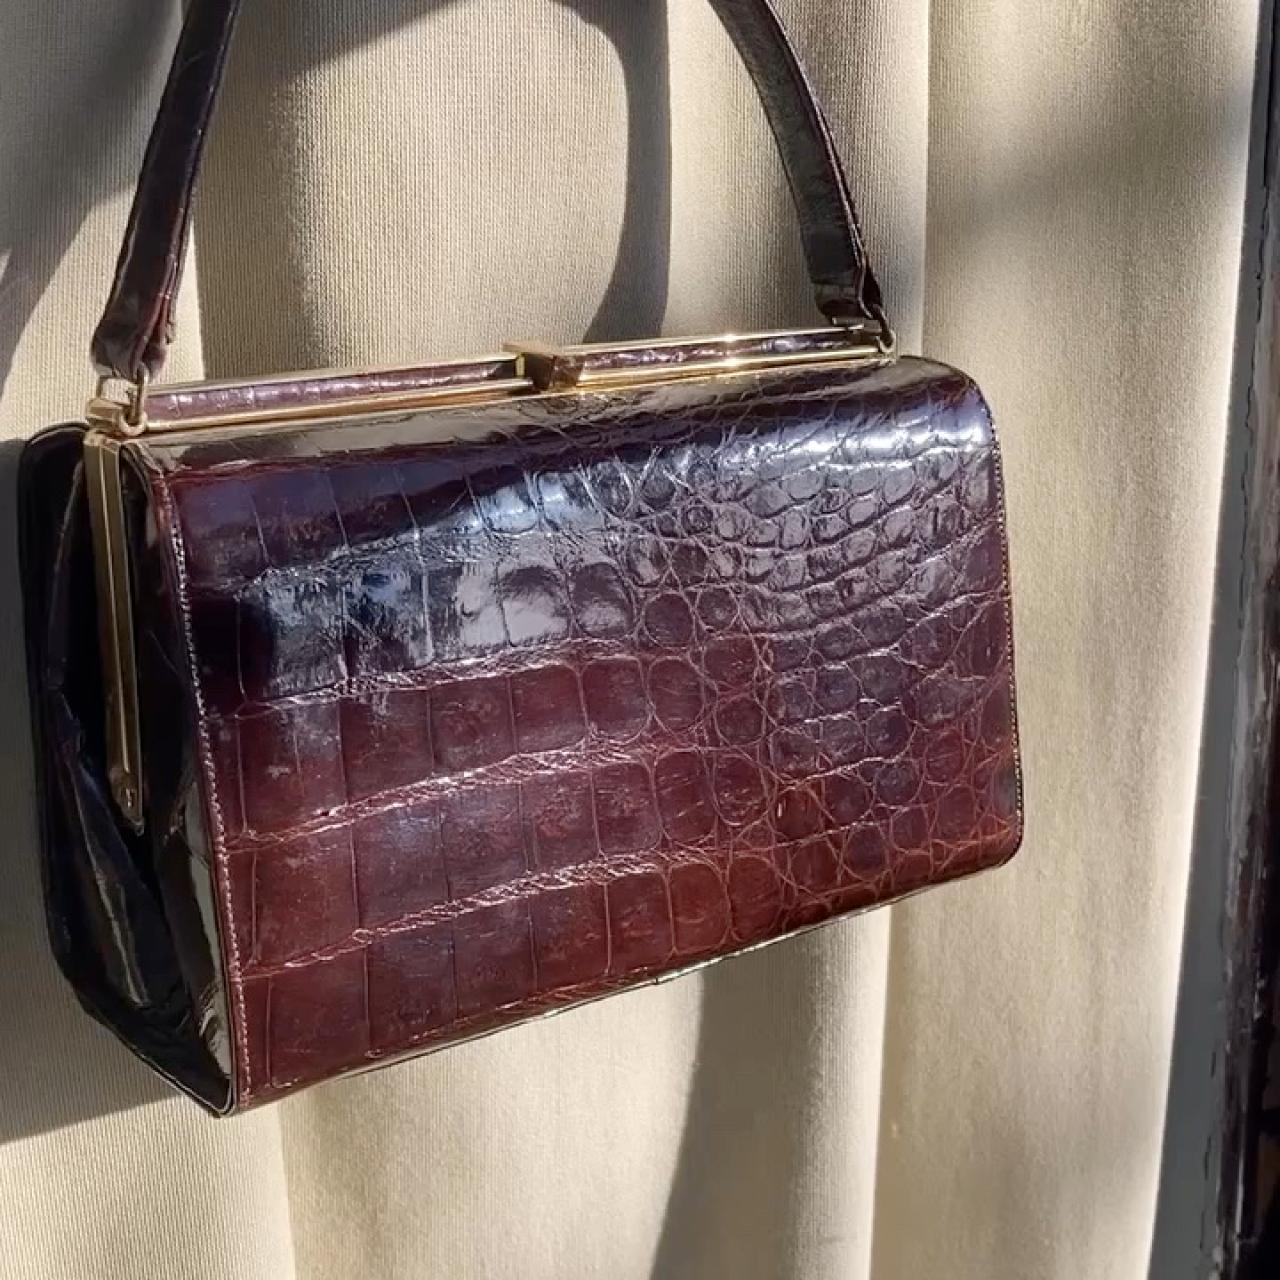 Bellestone 1961 classic alligator handbag. Deep rich... - Depop